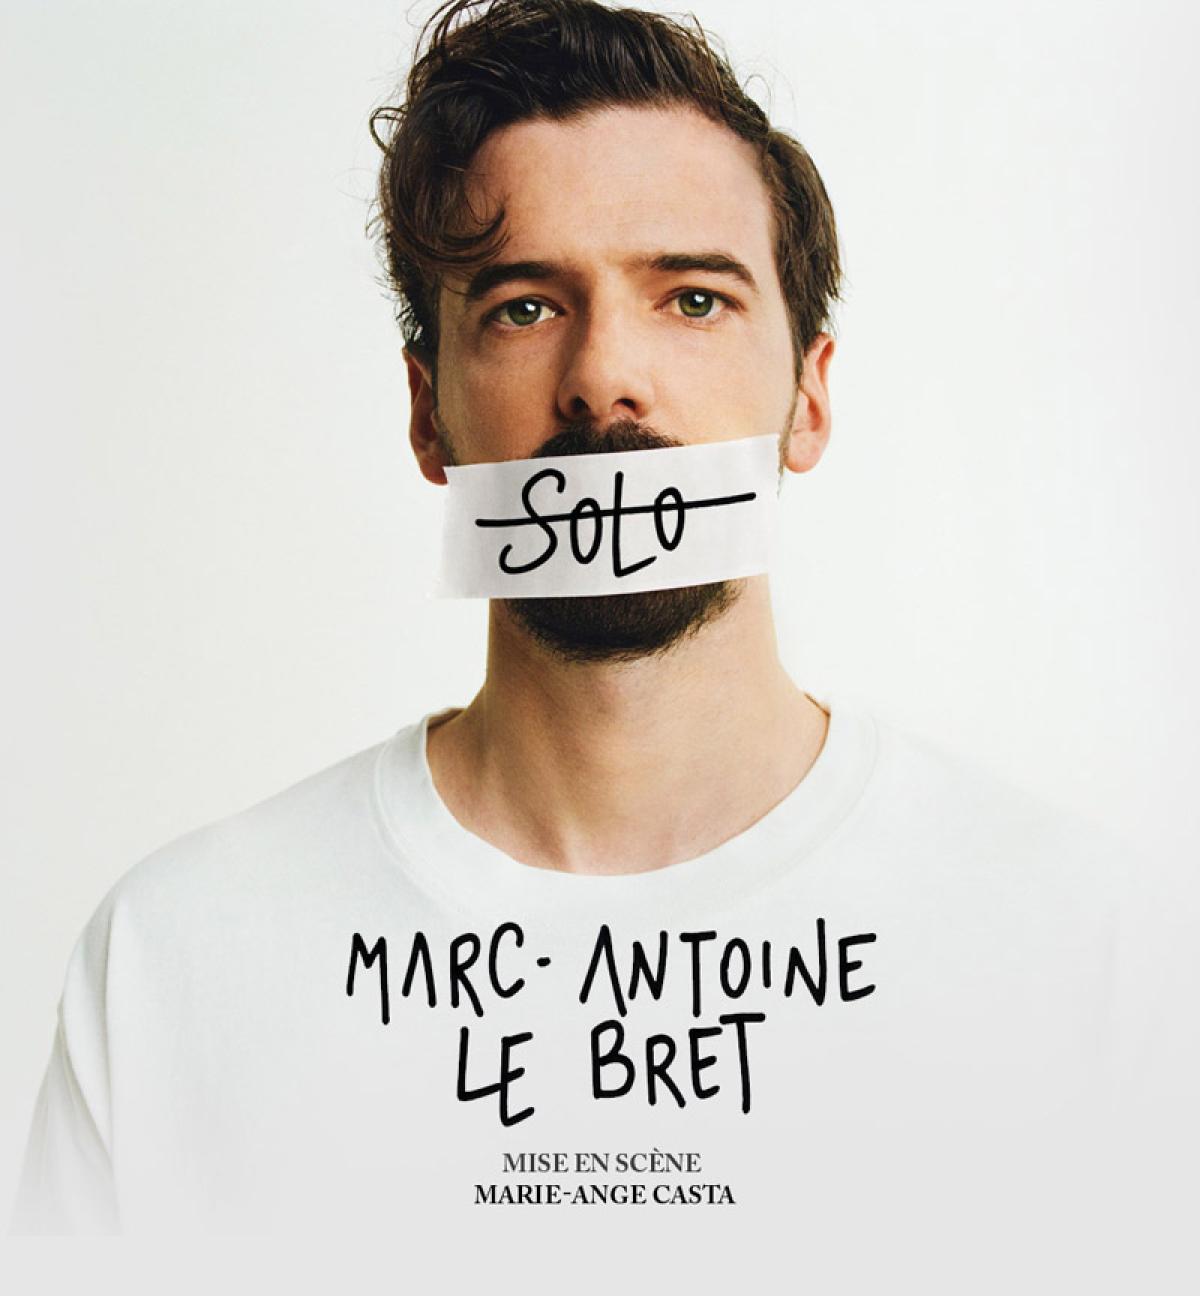 Marc-Antoine Le Bret at Les Angenoises Tickets